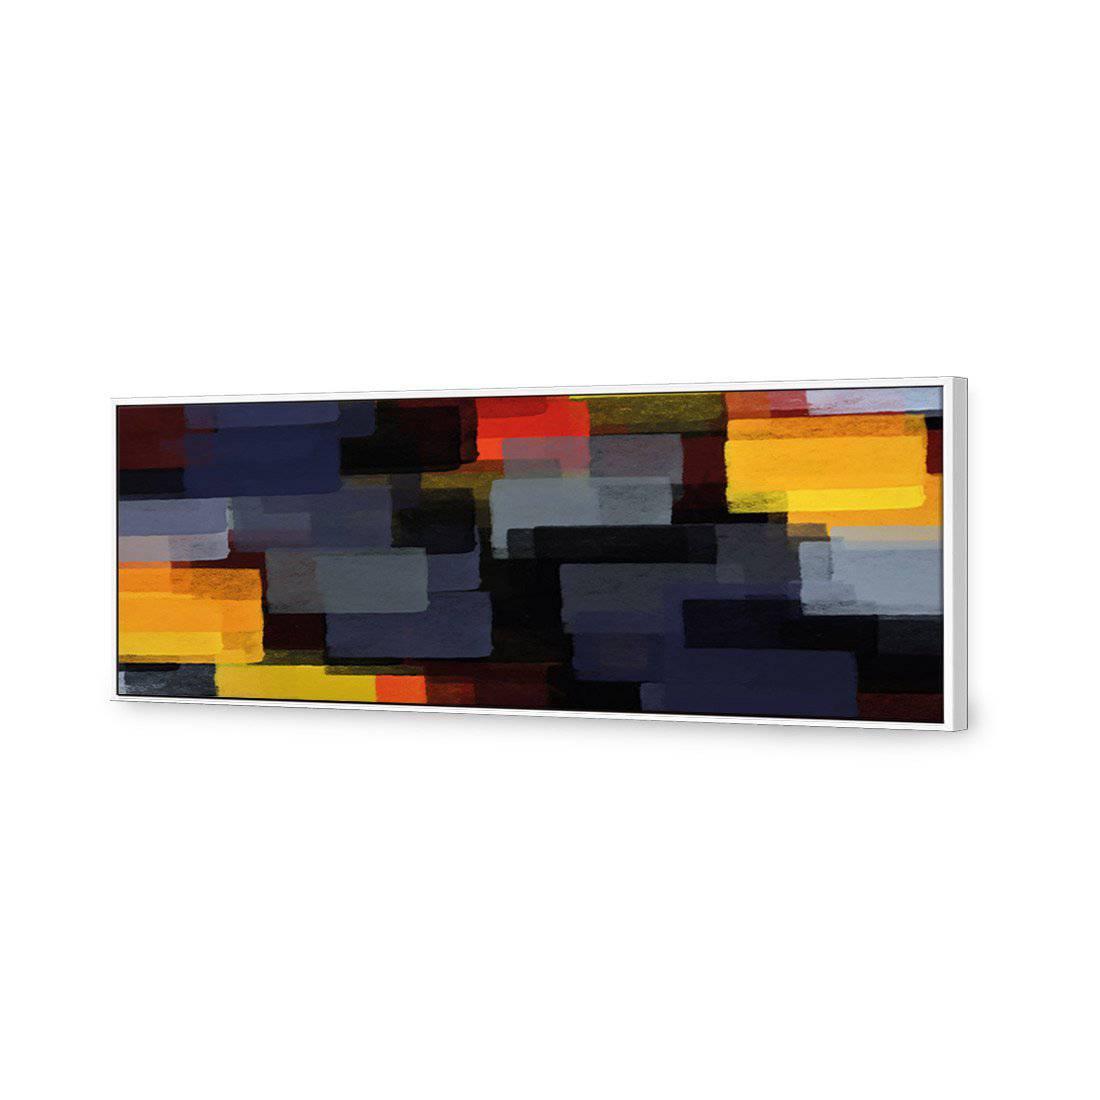 Colliding Blocks Canvas Art-Canvas-Wall Art Designs-60x20cm-Canvas - White Frame-Wall Art Designs